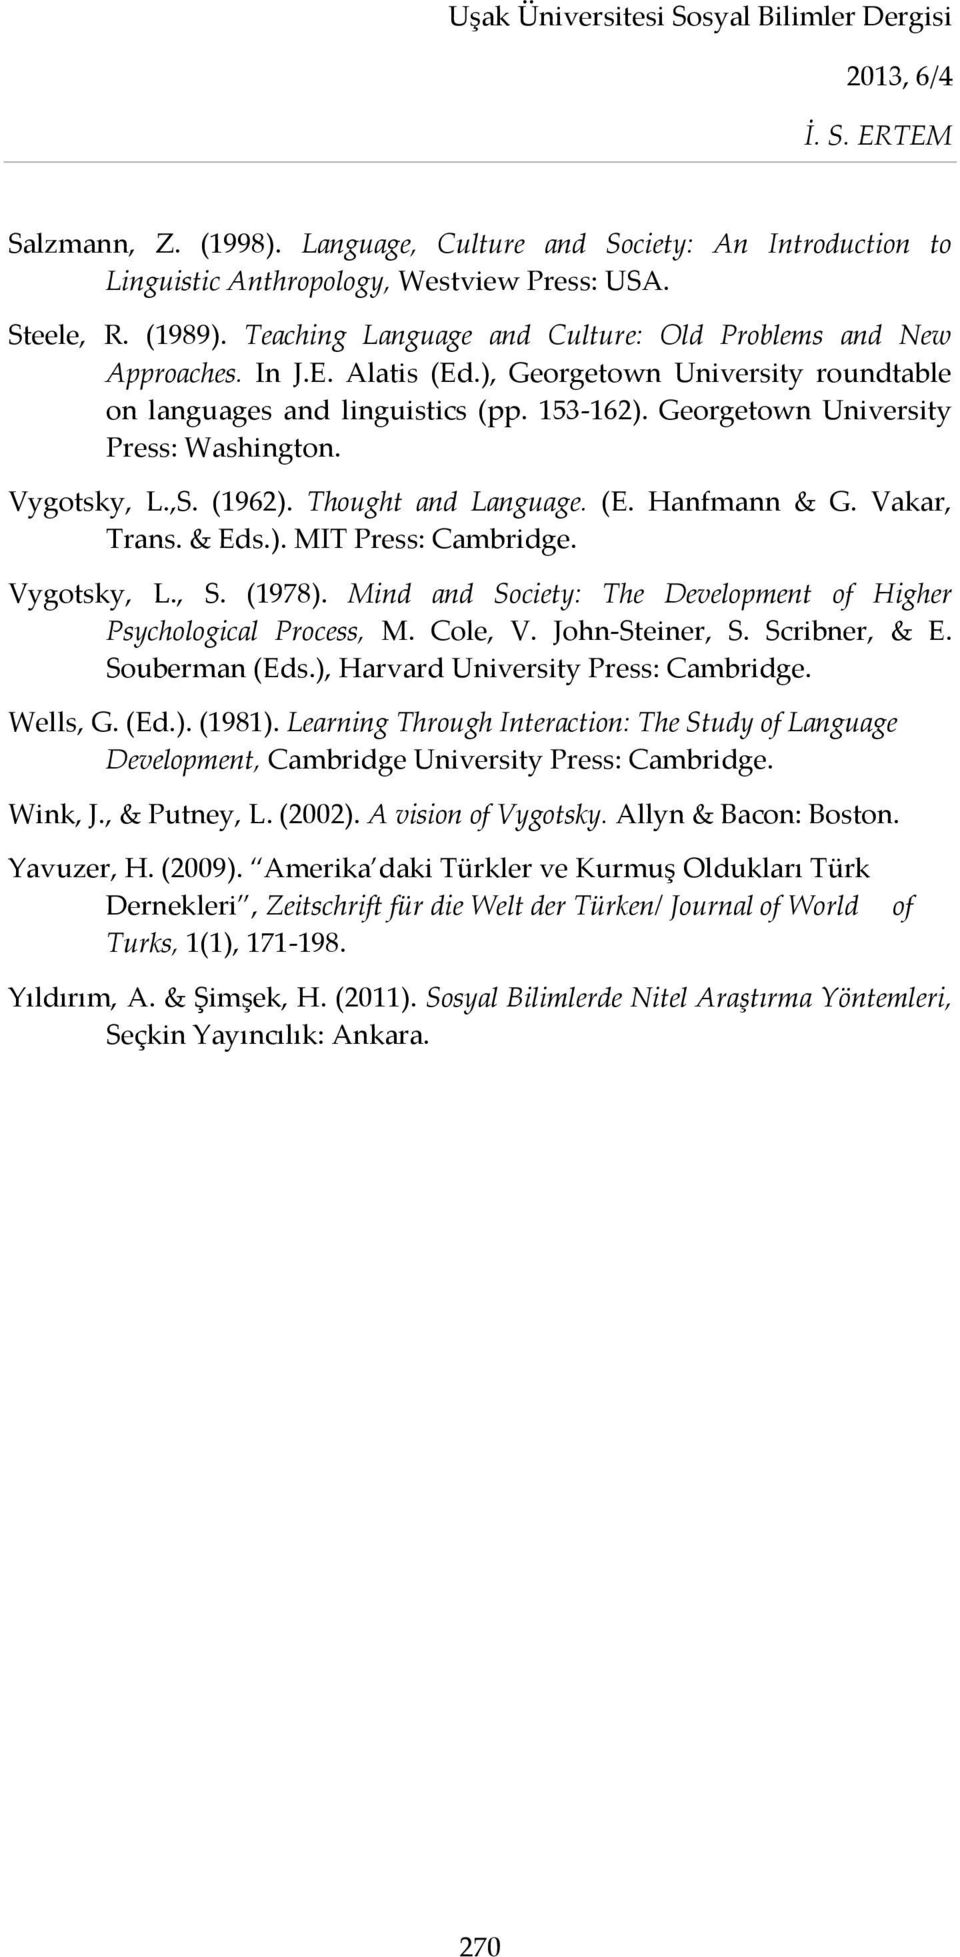 Vakar, Trans. & Eds.). MIT Press: Cambridge. Vygotsky, L., S. (1978). Mind and Society: The Development of Higher Psychological Process, M. Cole, V. John-Steiner, S. Scribner, & E. Souberman (Eds.